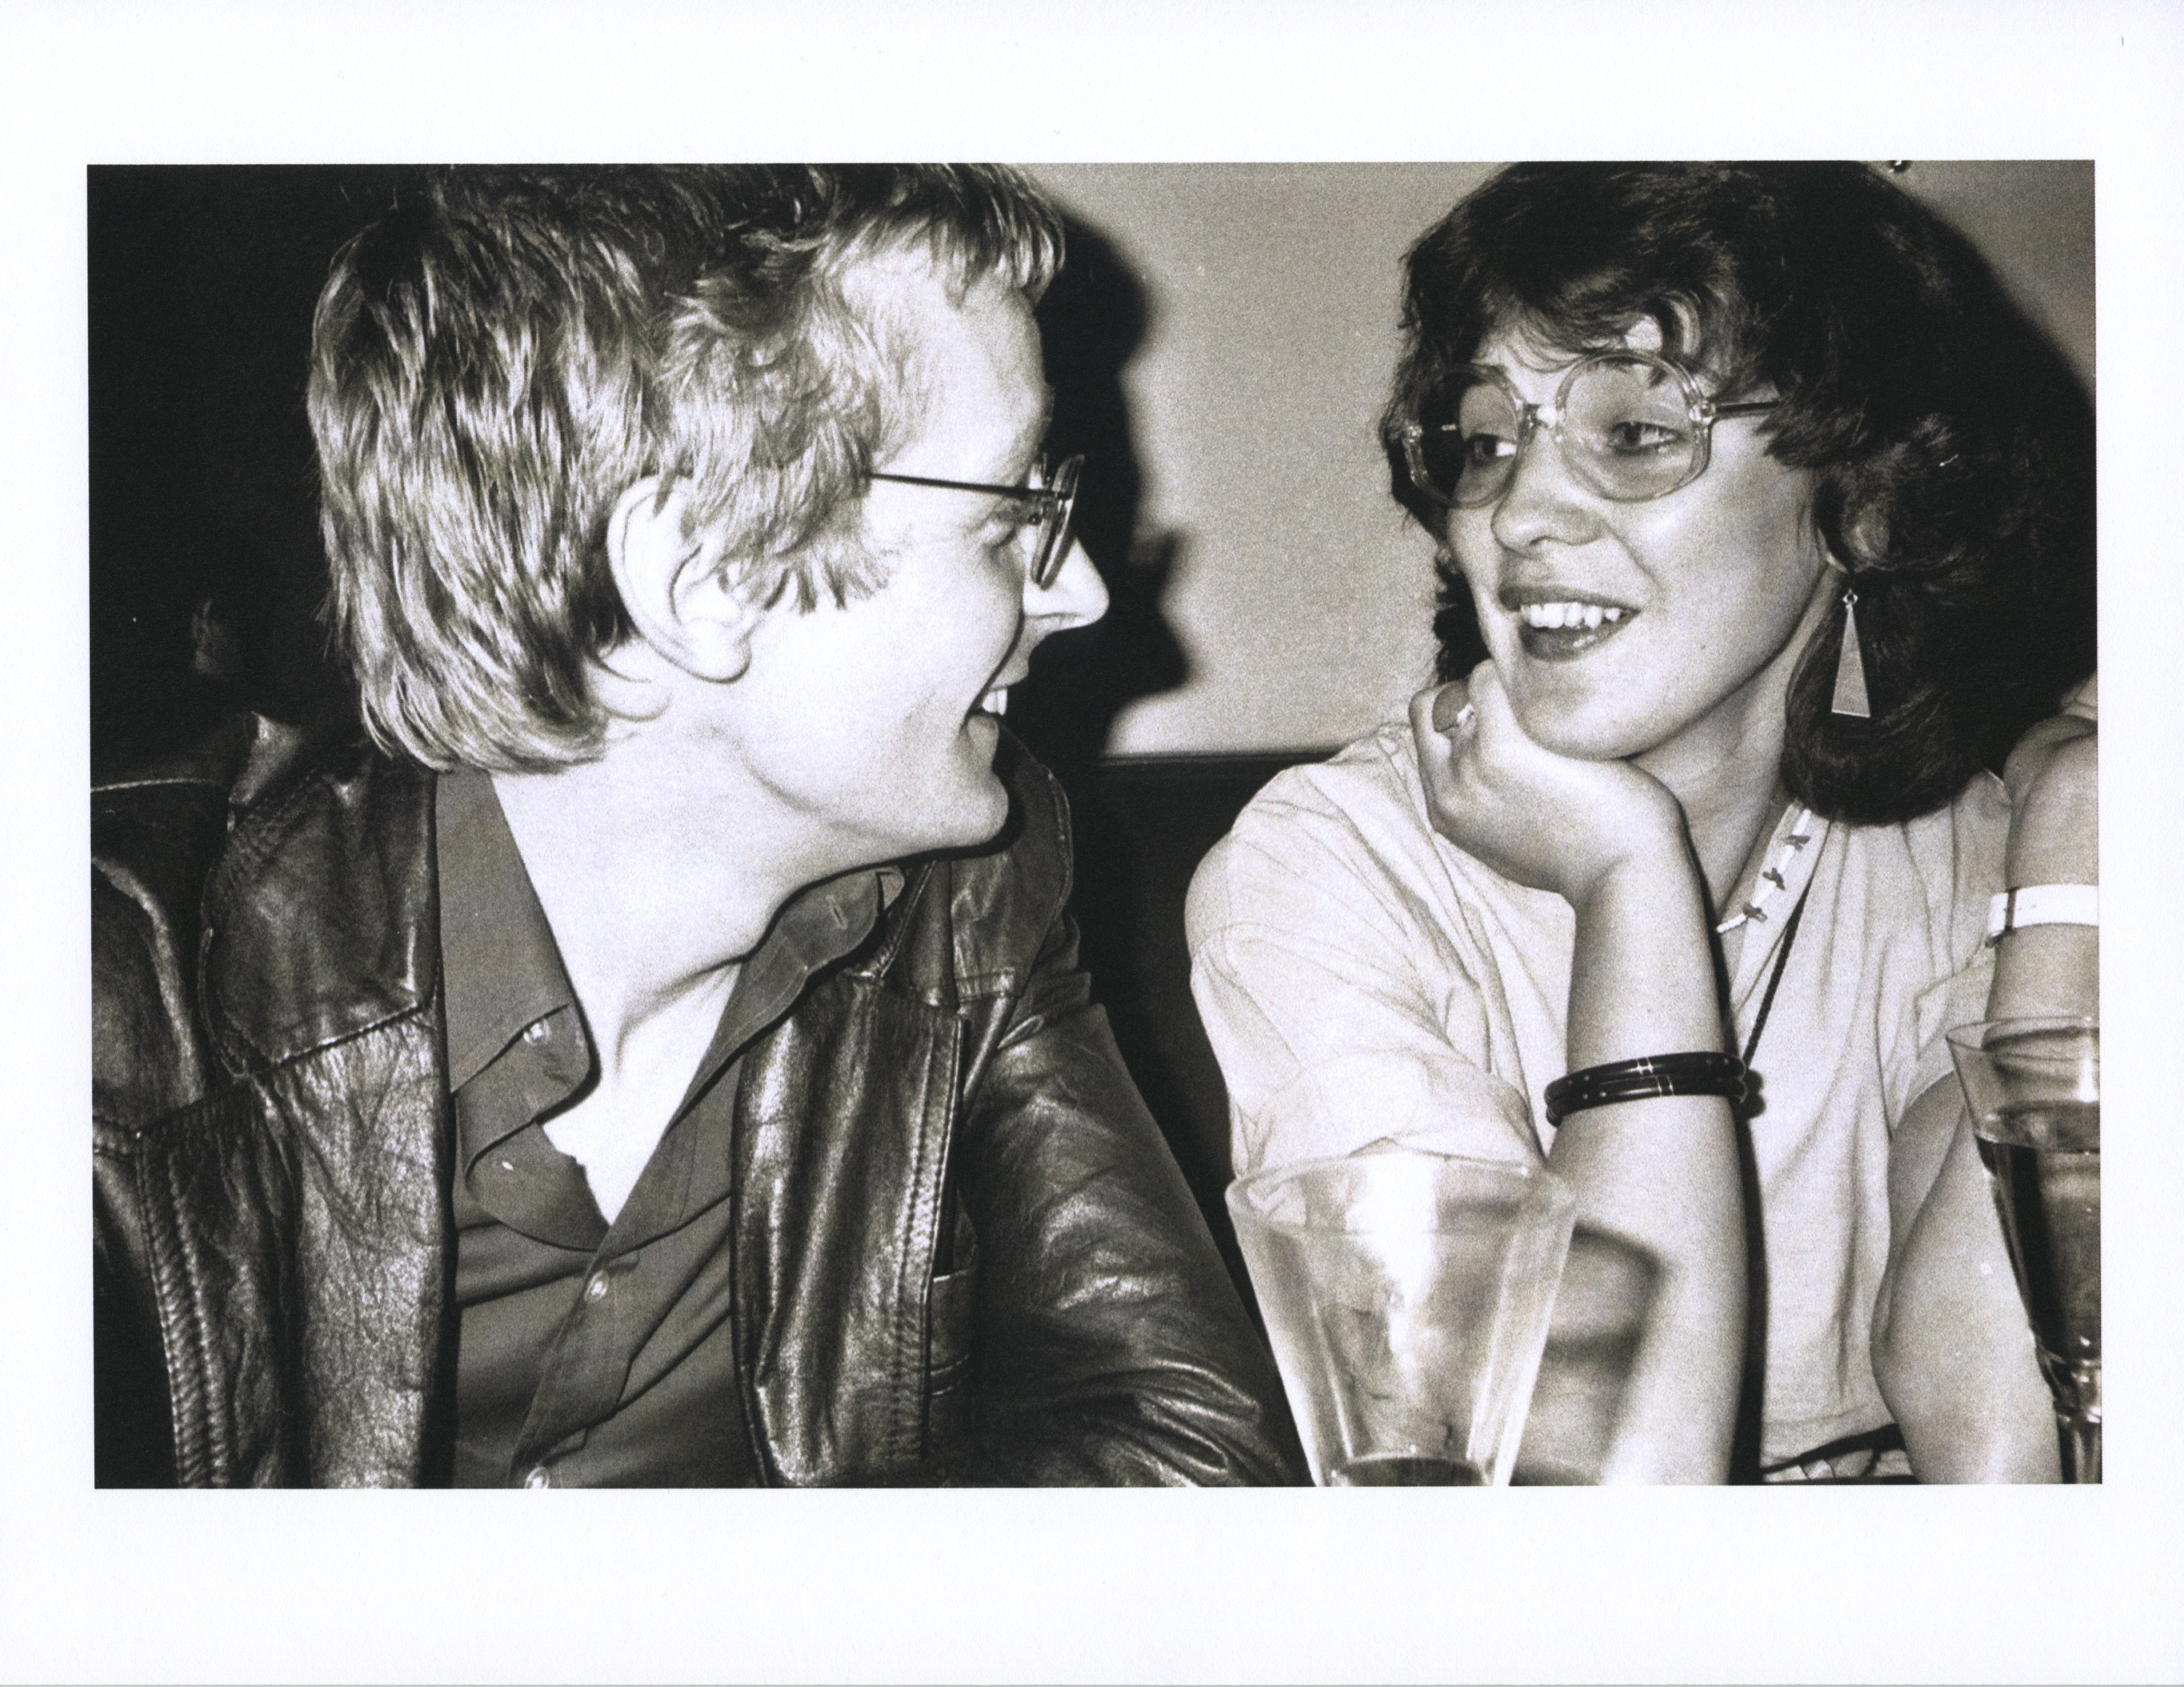 1979 - Rosemary & Miles at the Zanzibar club, Covent Garden